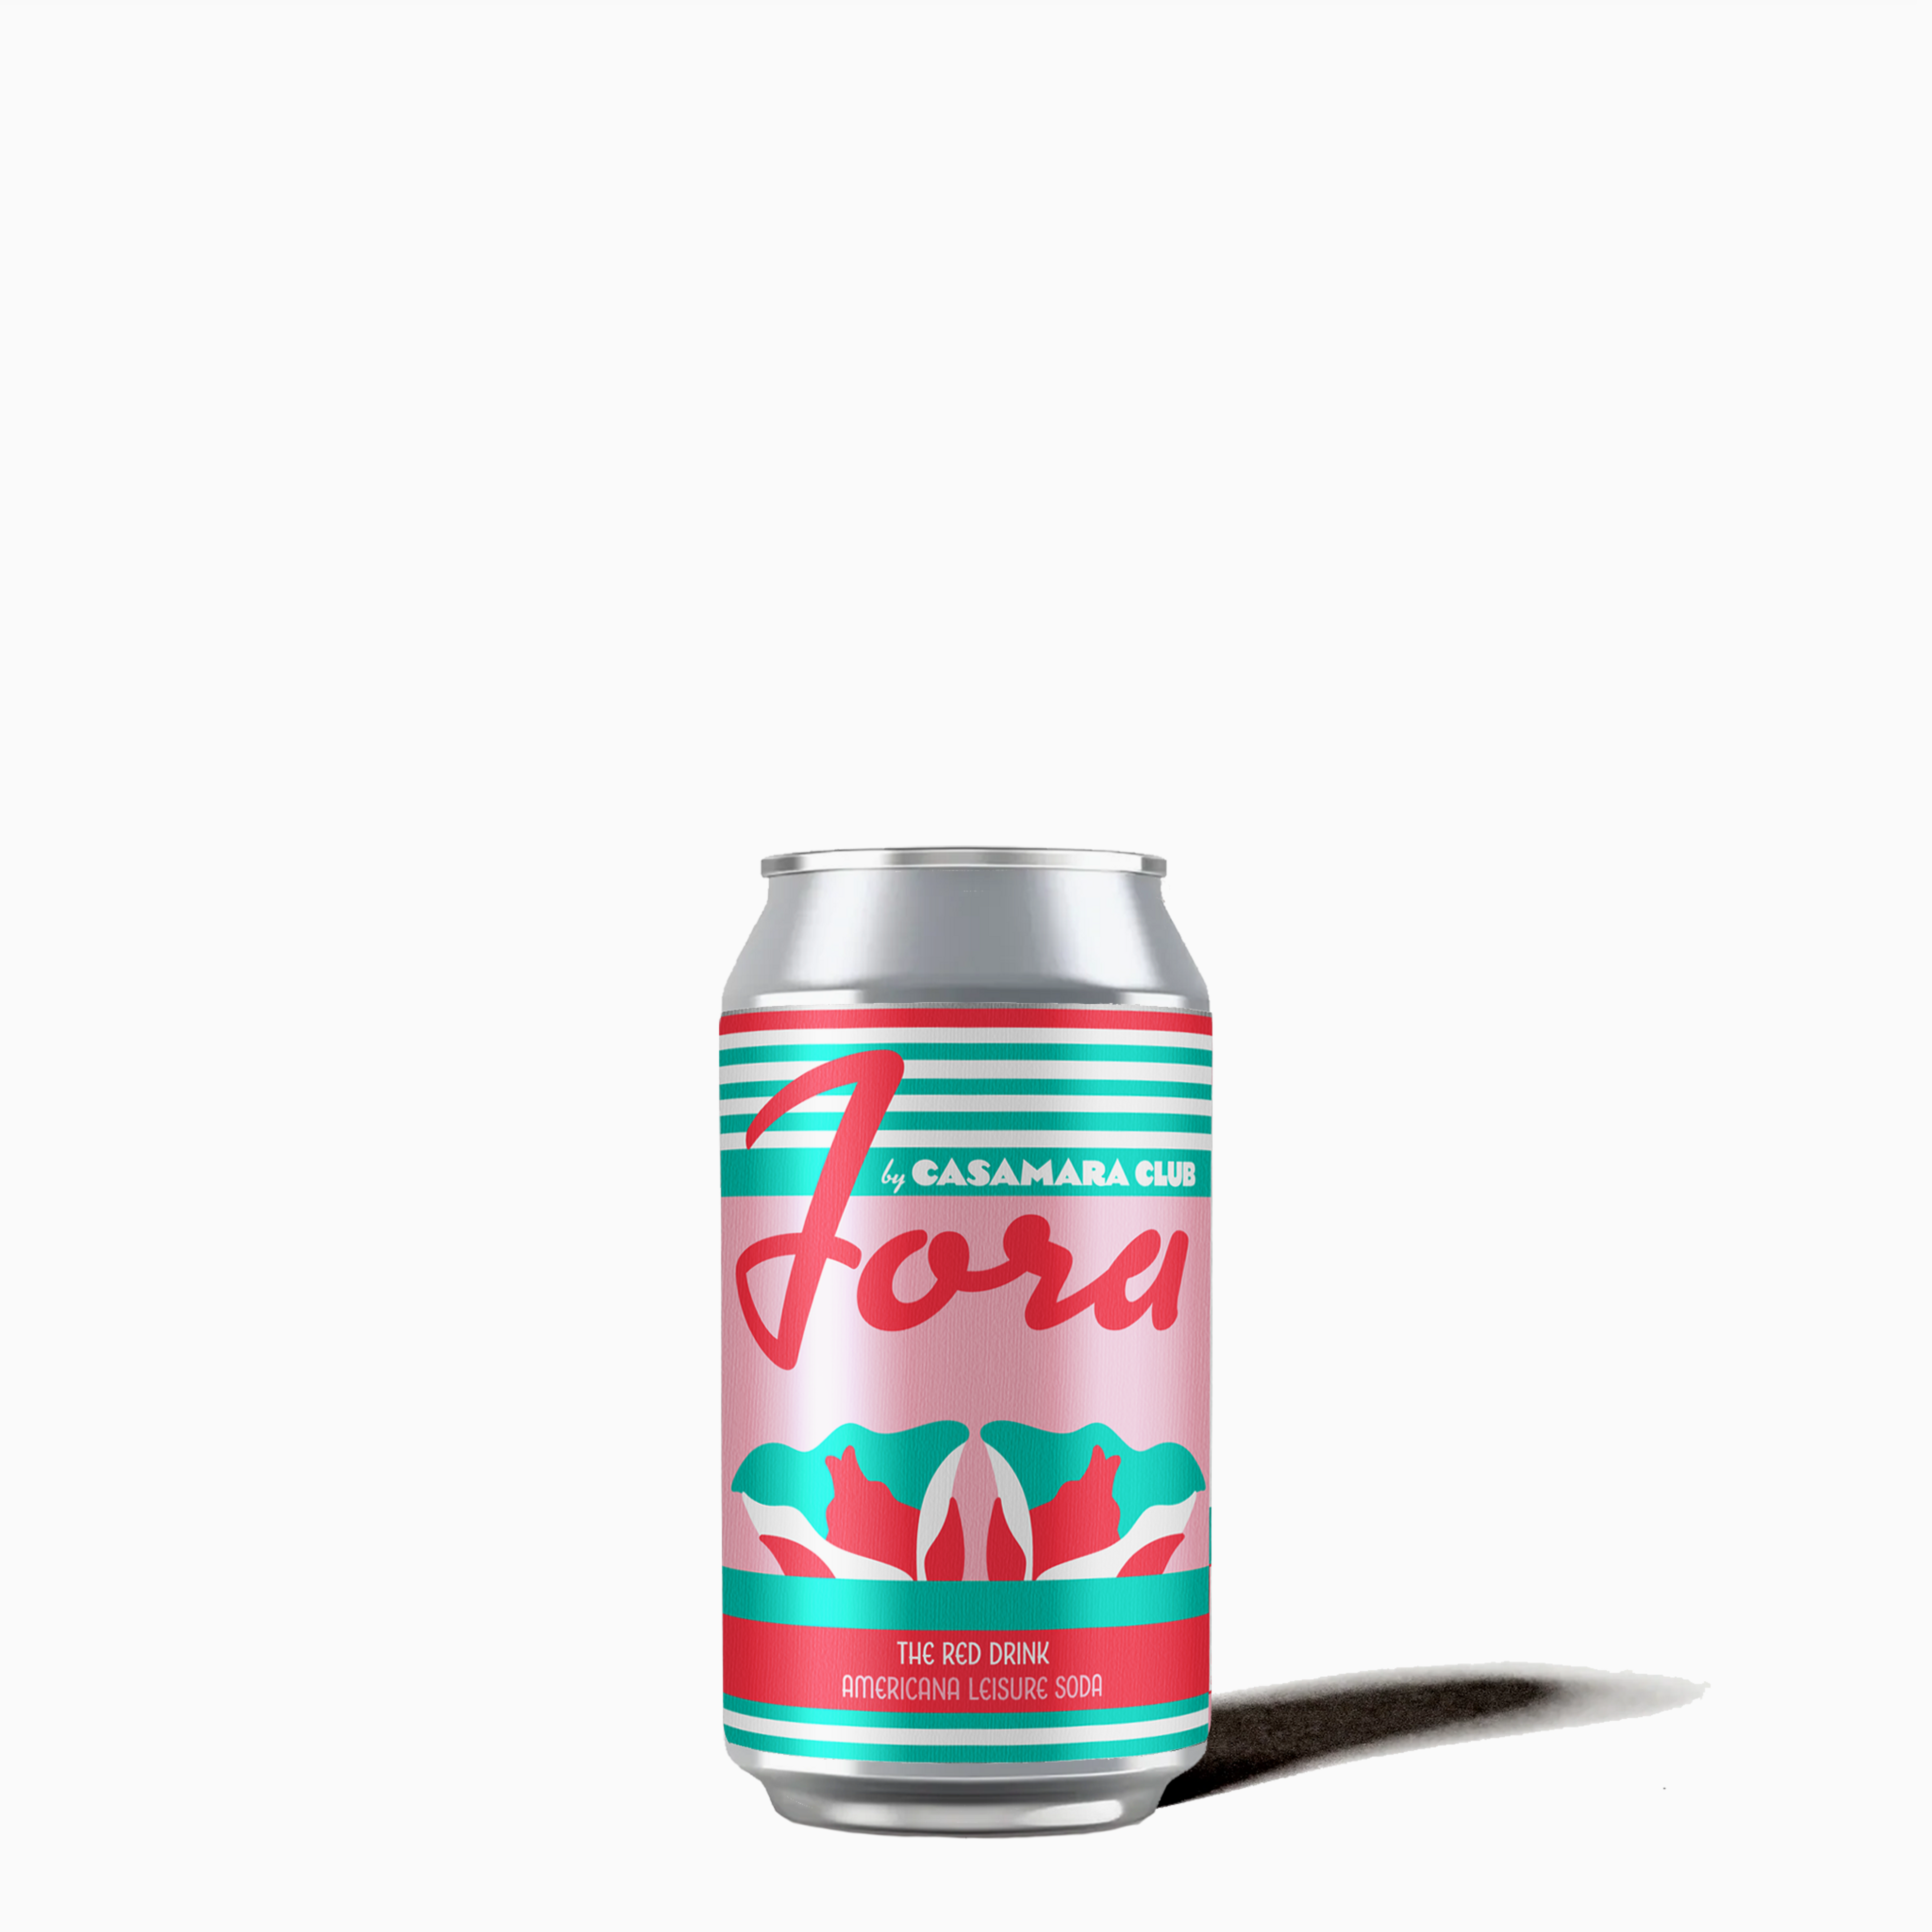 Fora cans, strawberry blossom — Garden District botanical soda